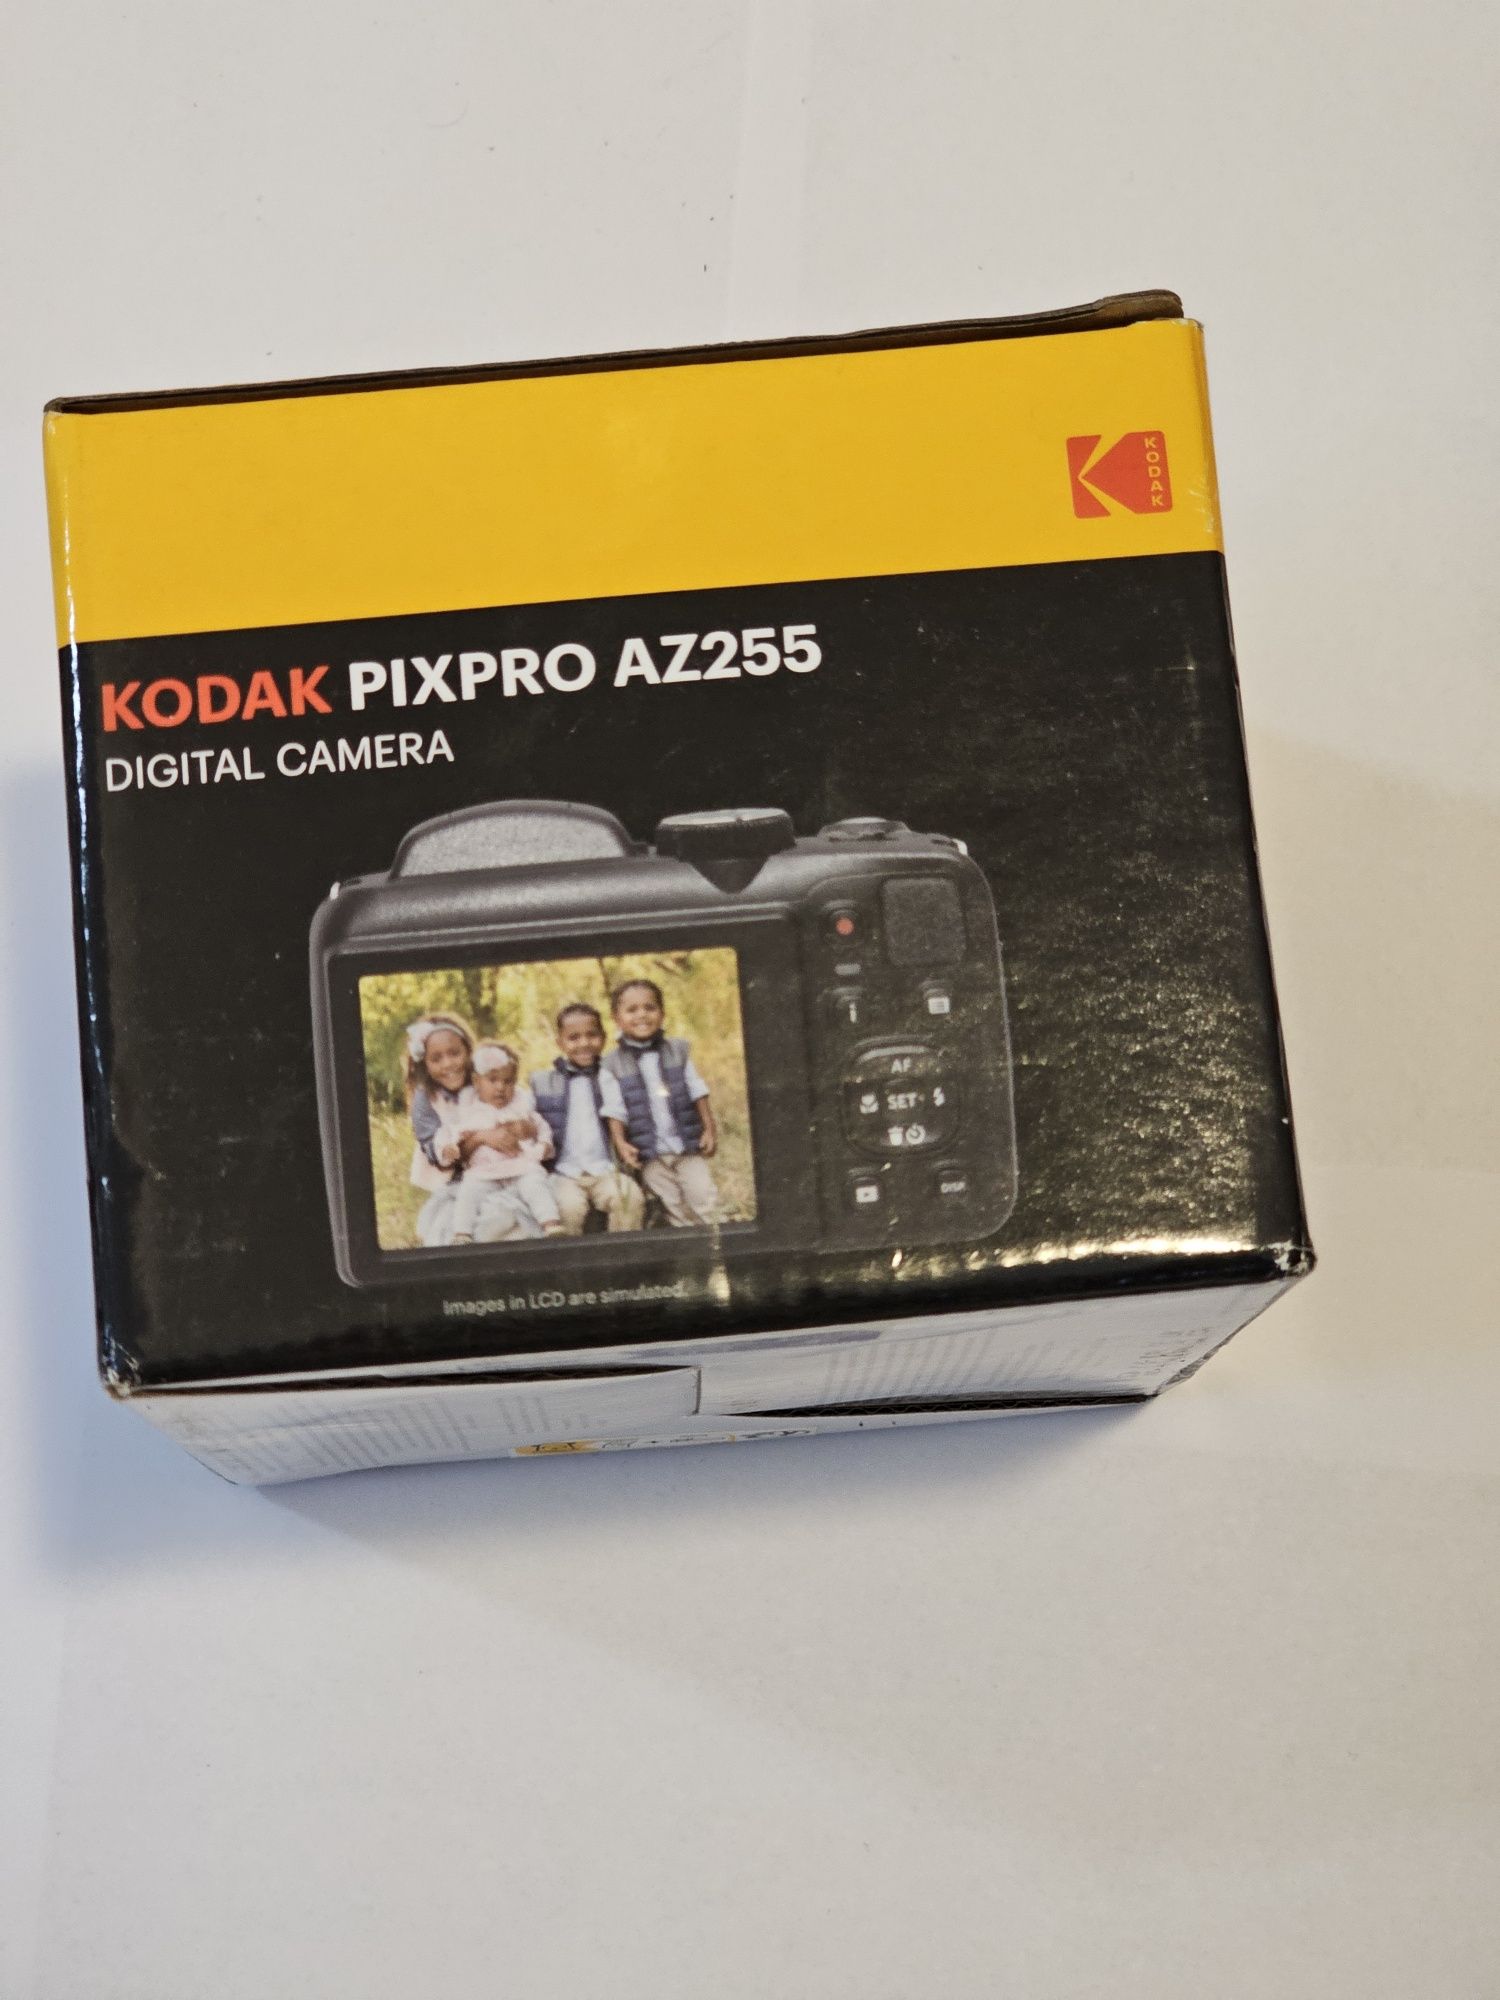 Aparat Foto Kodak PixPro AZ255, 16 MP, Zoom 25X, Full HD – 1080p, Alb